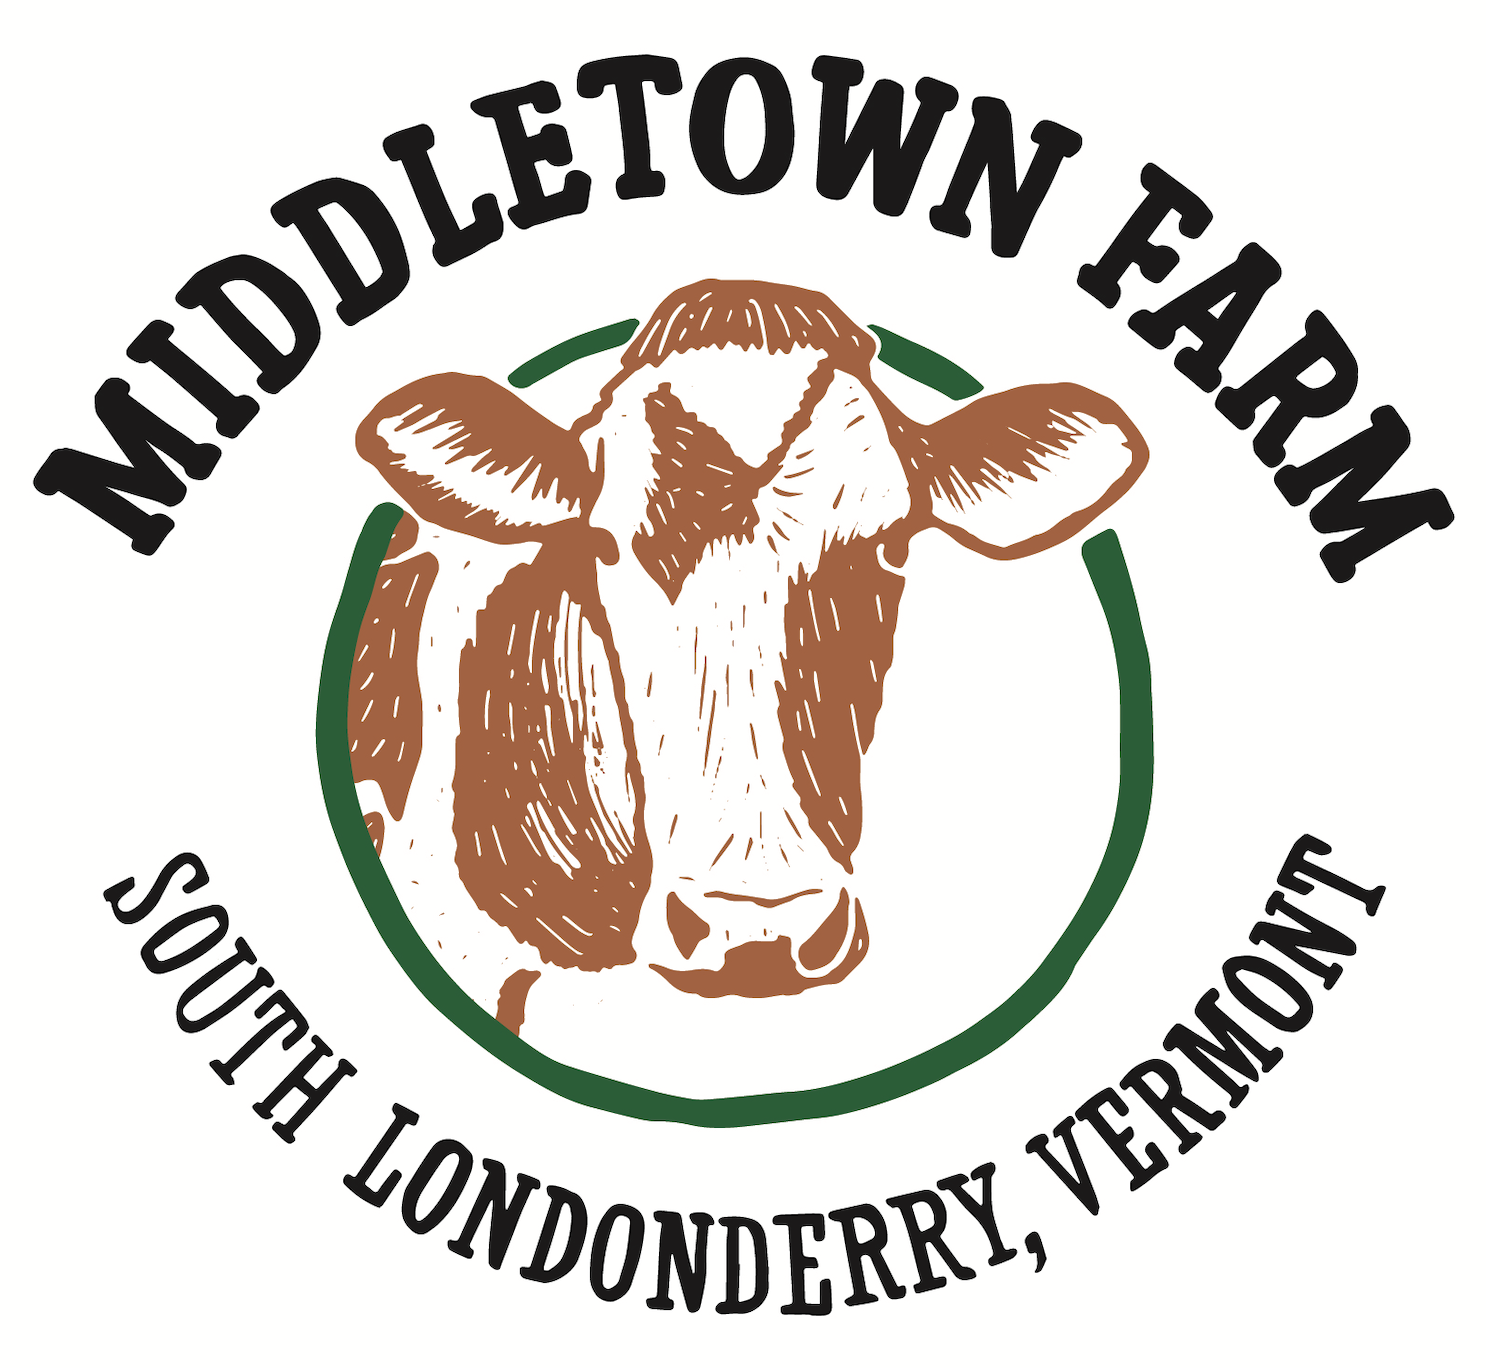 Middletown Farm